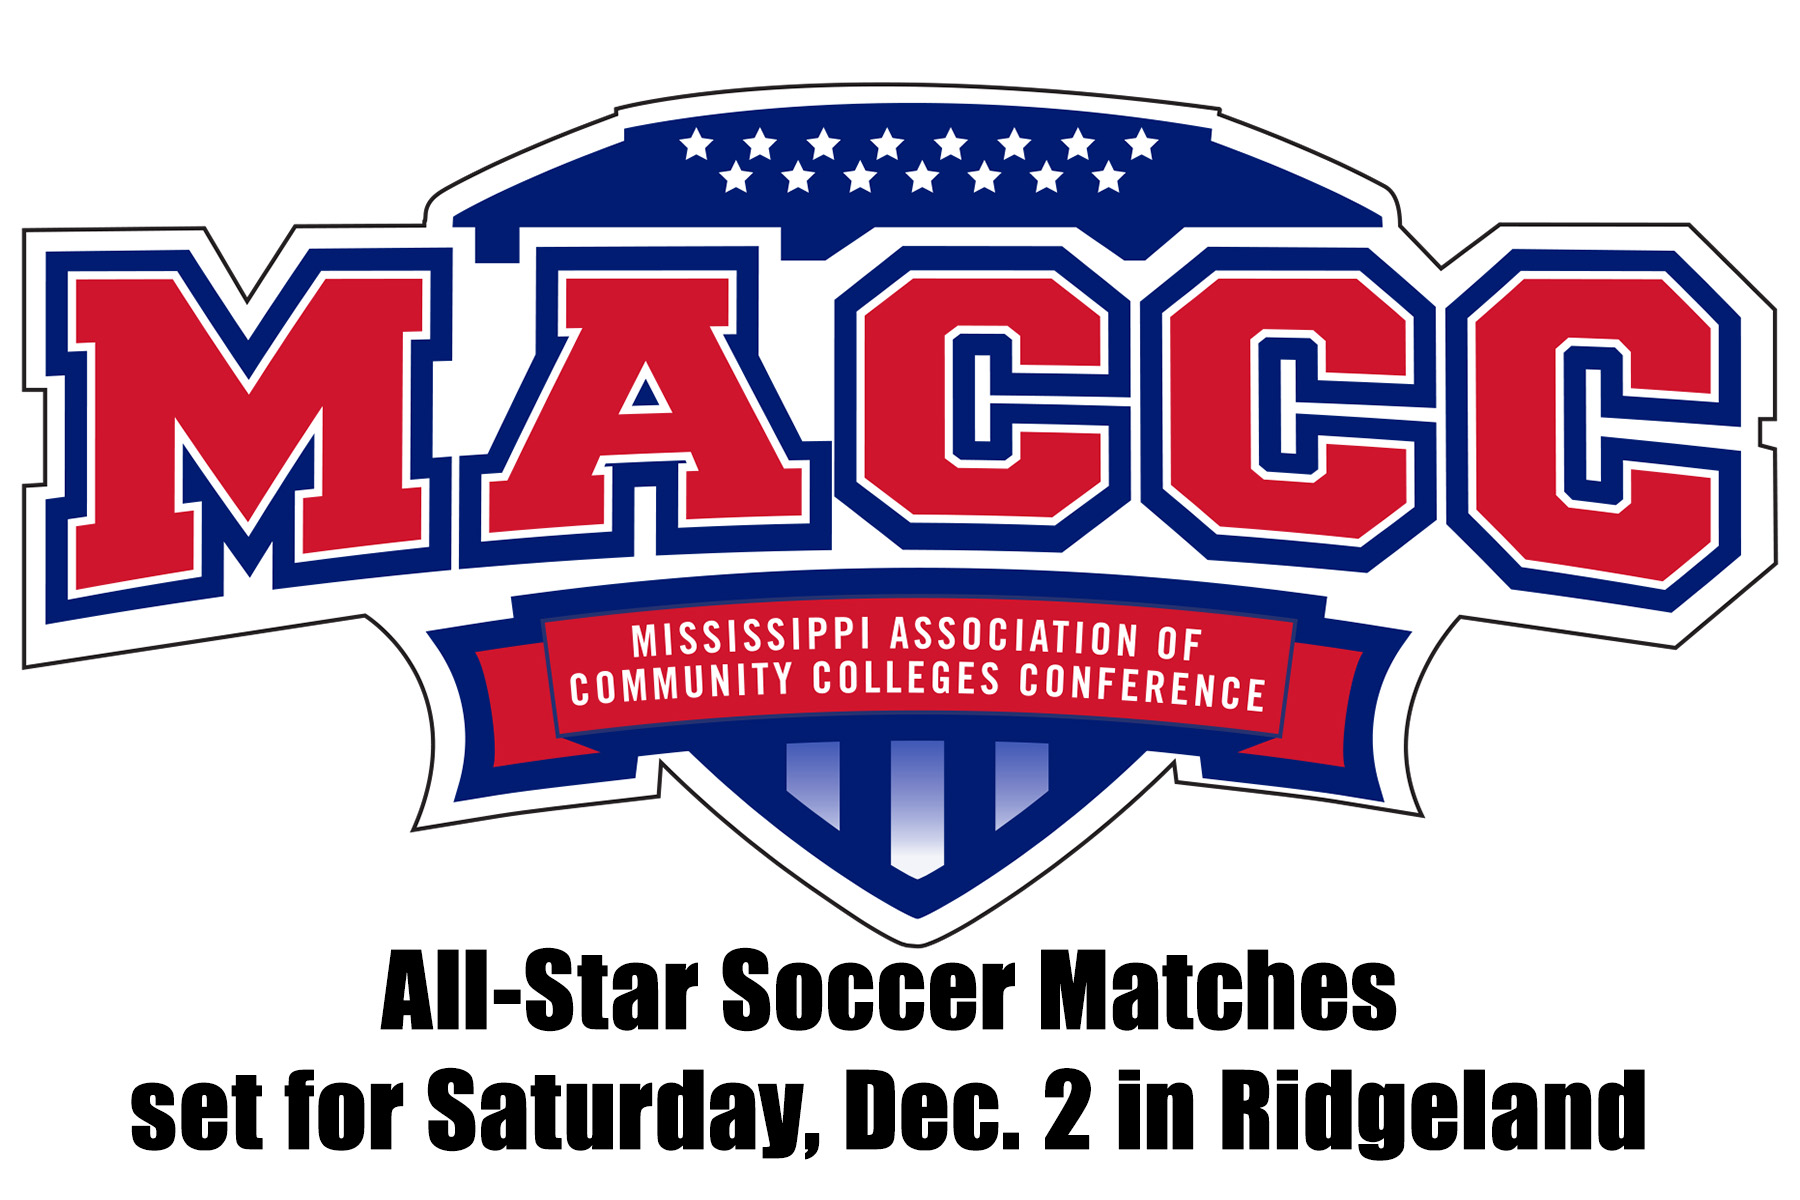 All-Star Matches set for Saturday, Dec. 2 in Ridgeland